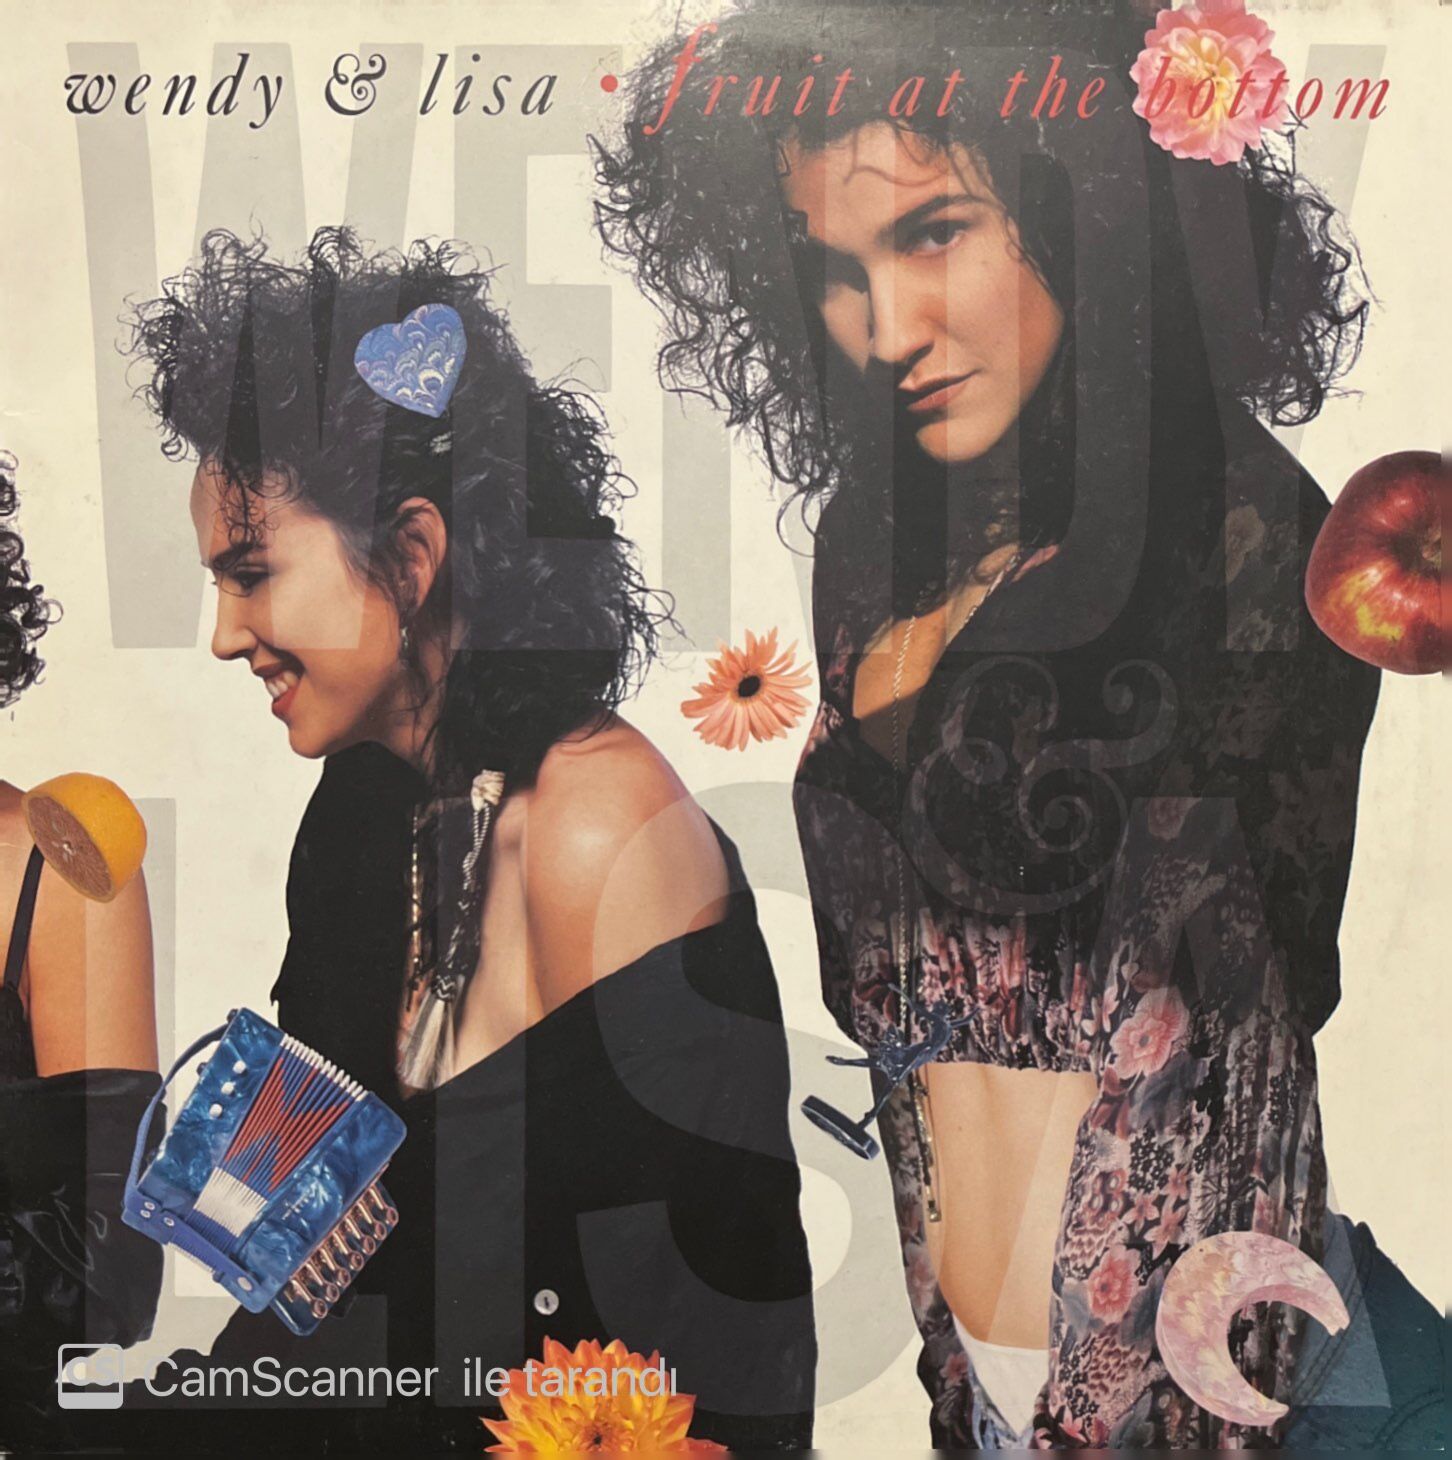 Wendy & Lisa Fruit At The Bottom LP Plak